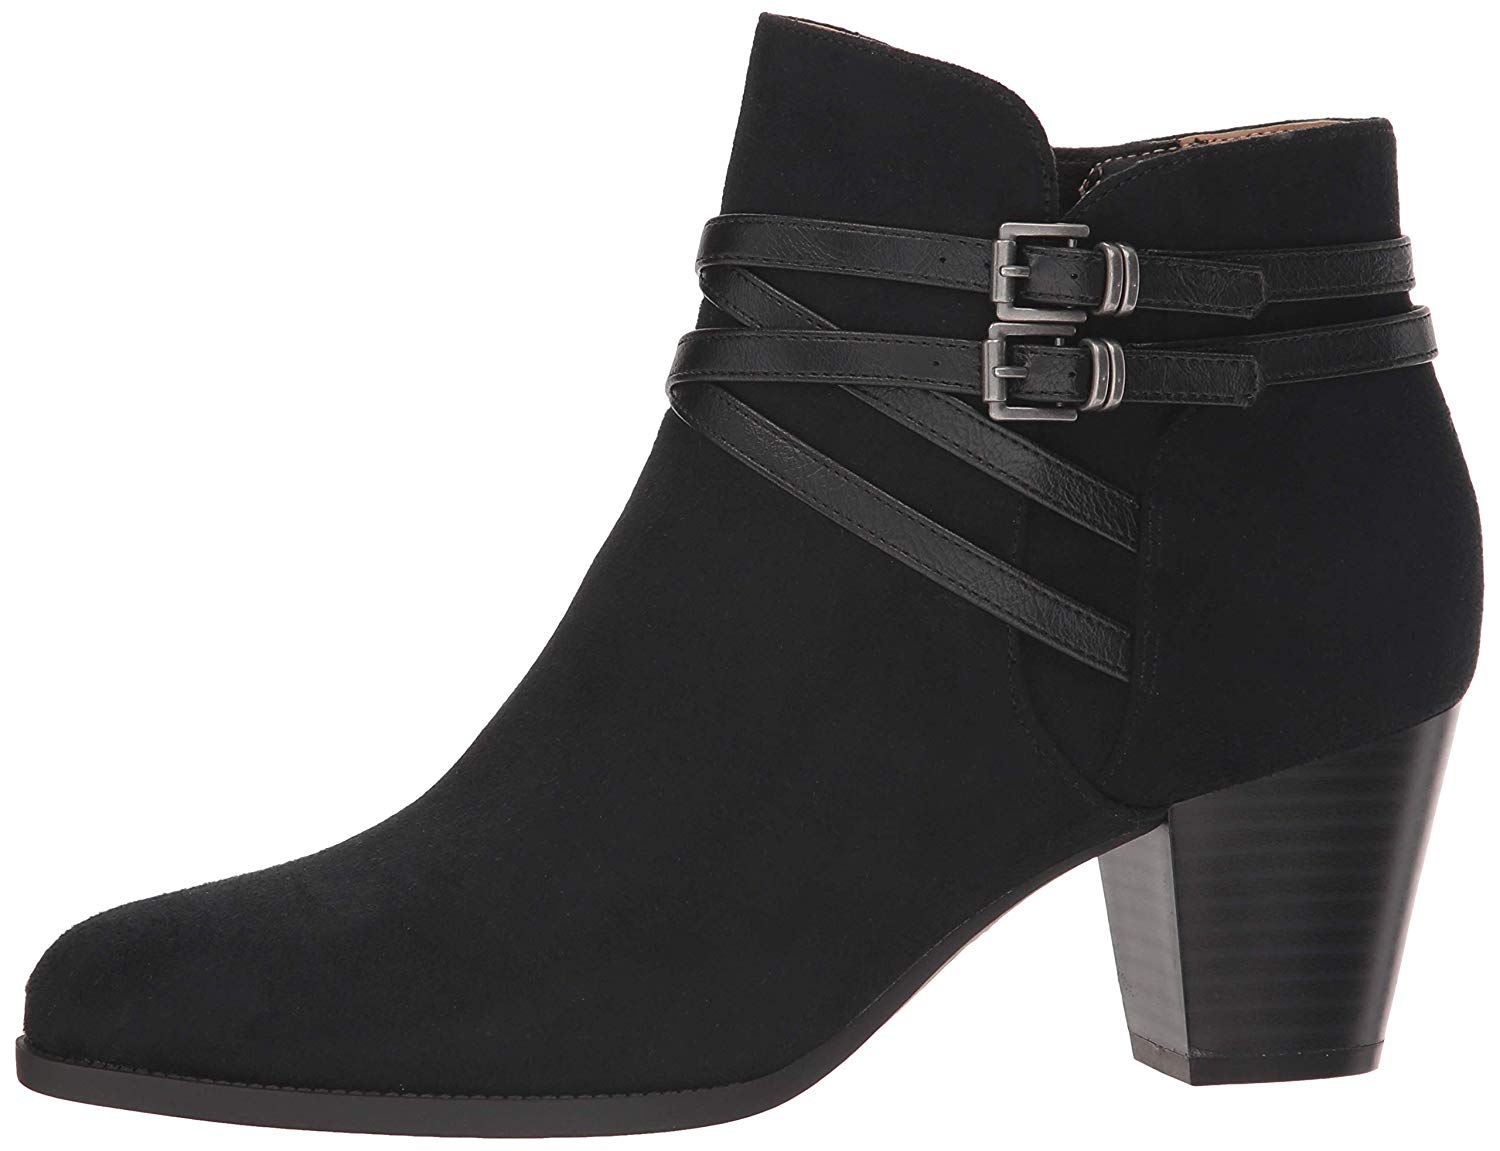 LifeStride Women's Jezebel Ankle Bootie Boot, Black, Size 7.0 UOJi | eBay